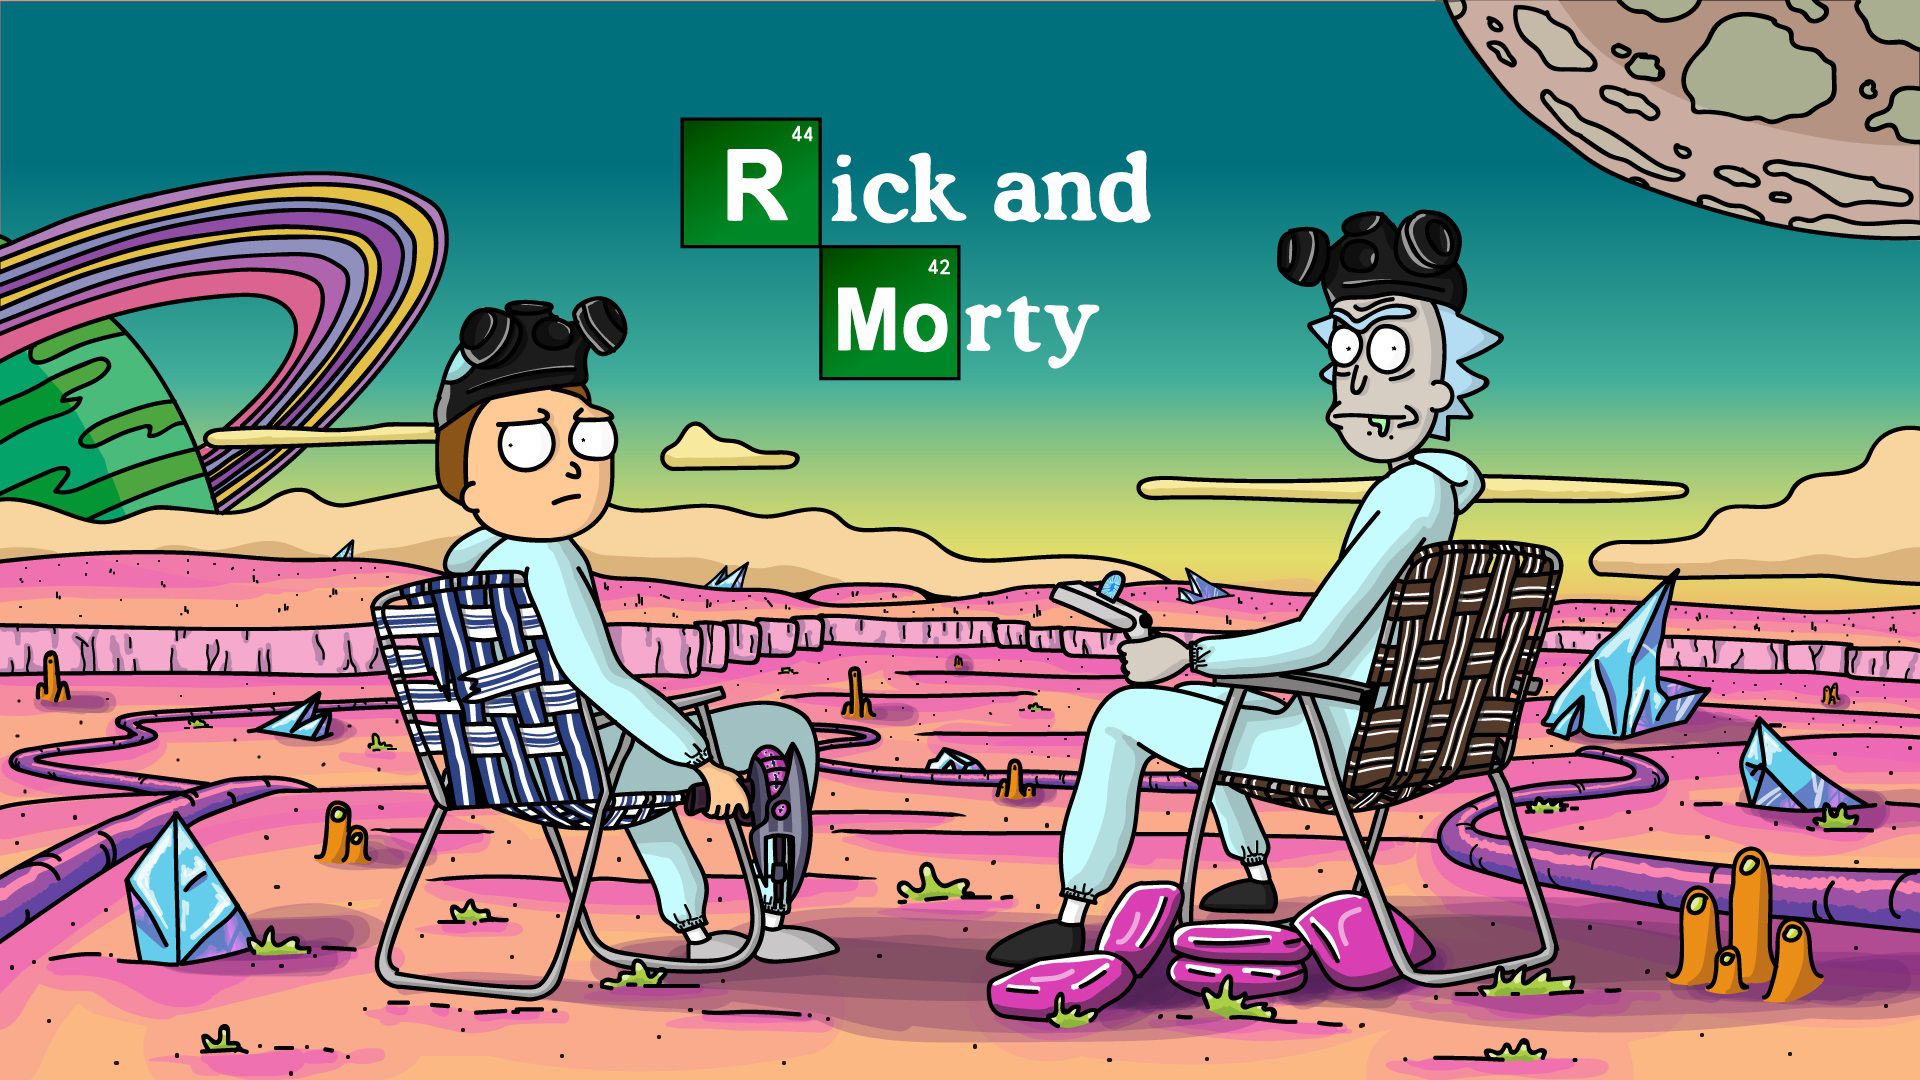 Season 4 Premiere of Rick and Morty Reveals Major Change